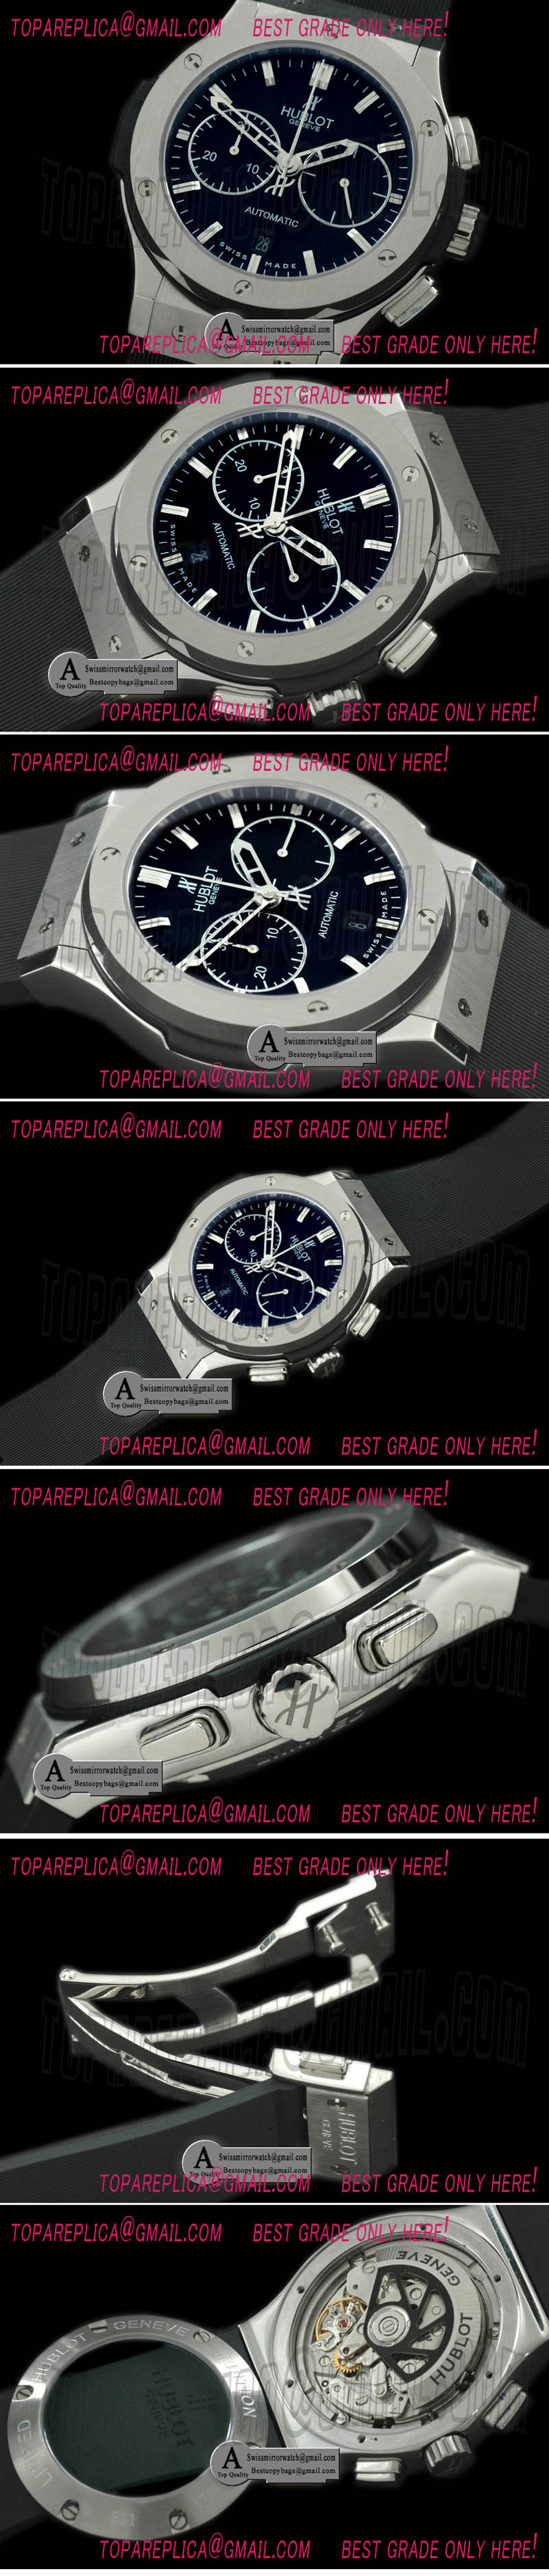 Hublot 521.NX.1170.LR Classic Fusion Chrono SS/Leather Black A-7750 Sec@3 Replica Watches